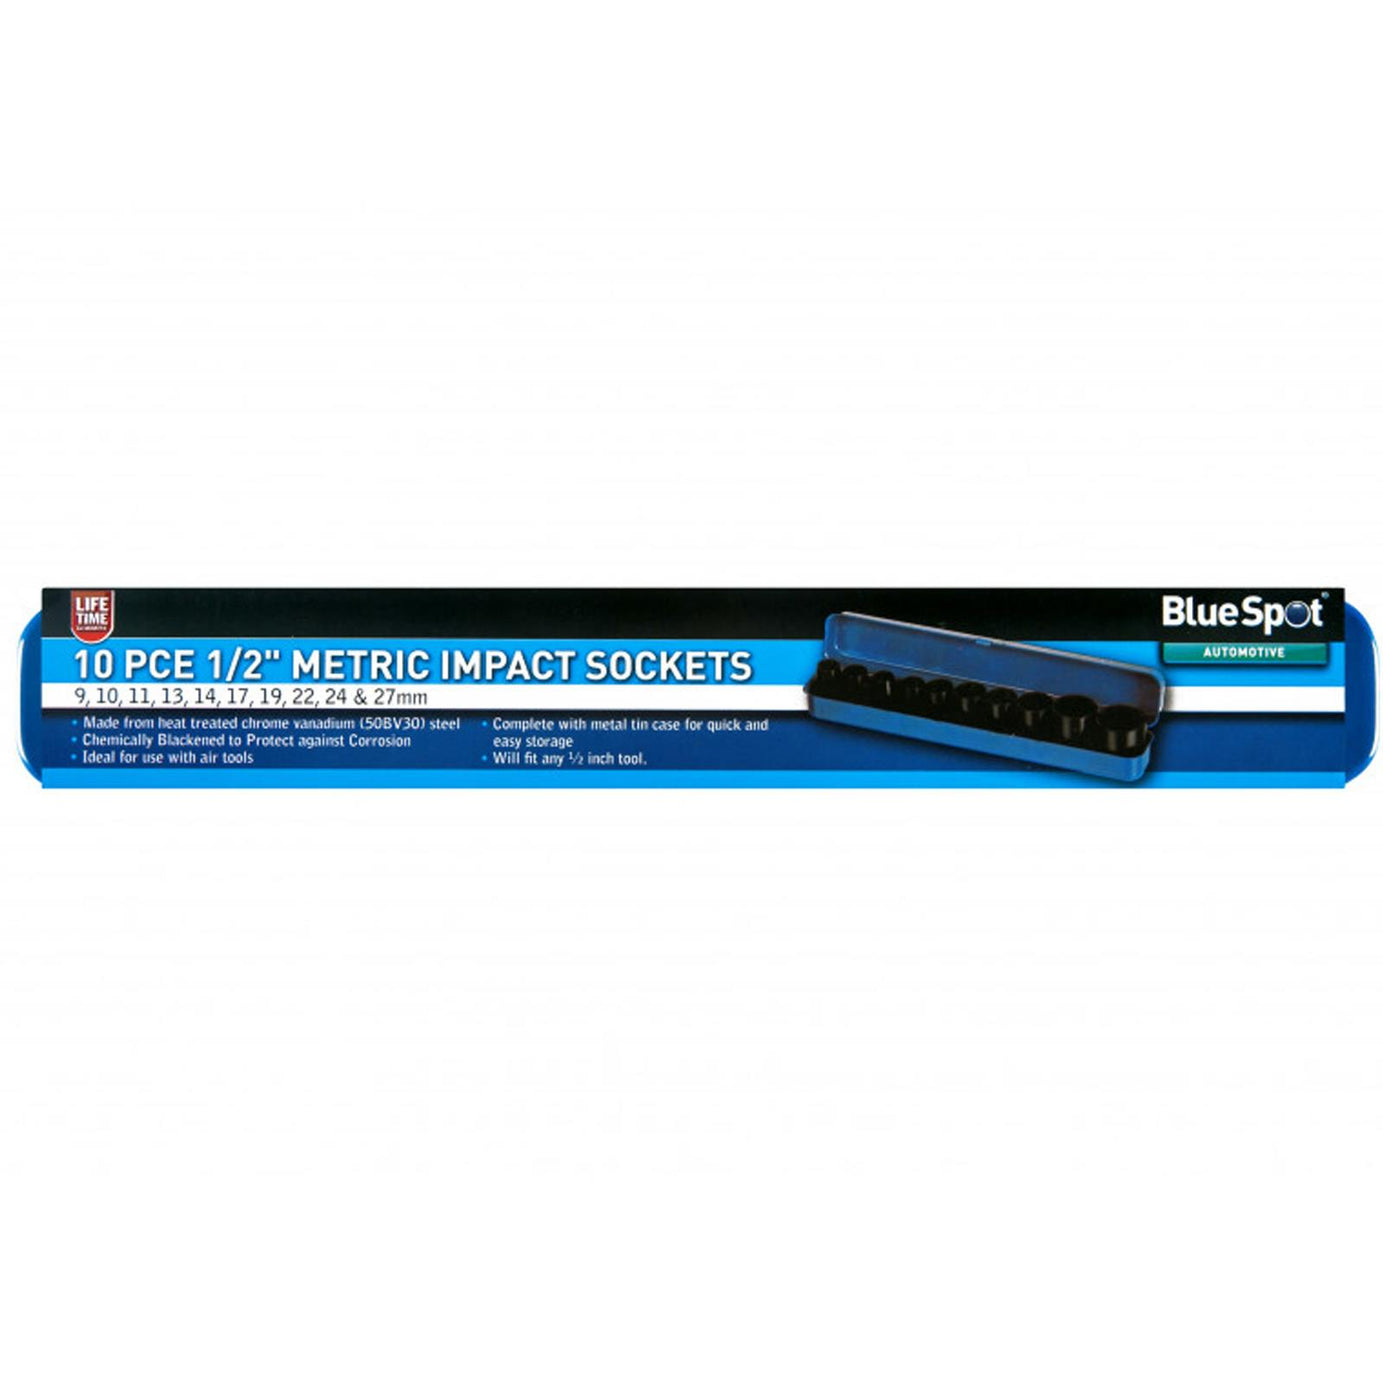 BlueSpot 10Pce 1/2" Metric Impact Sockets Socket Set (9-27mm) Heat Treated CRV